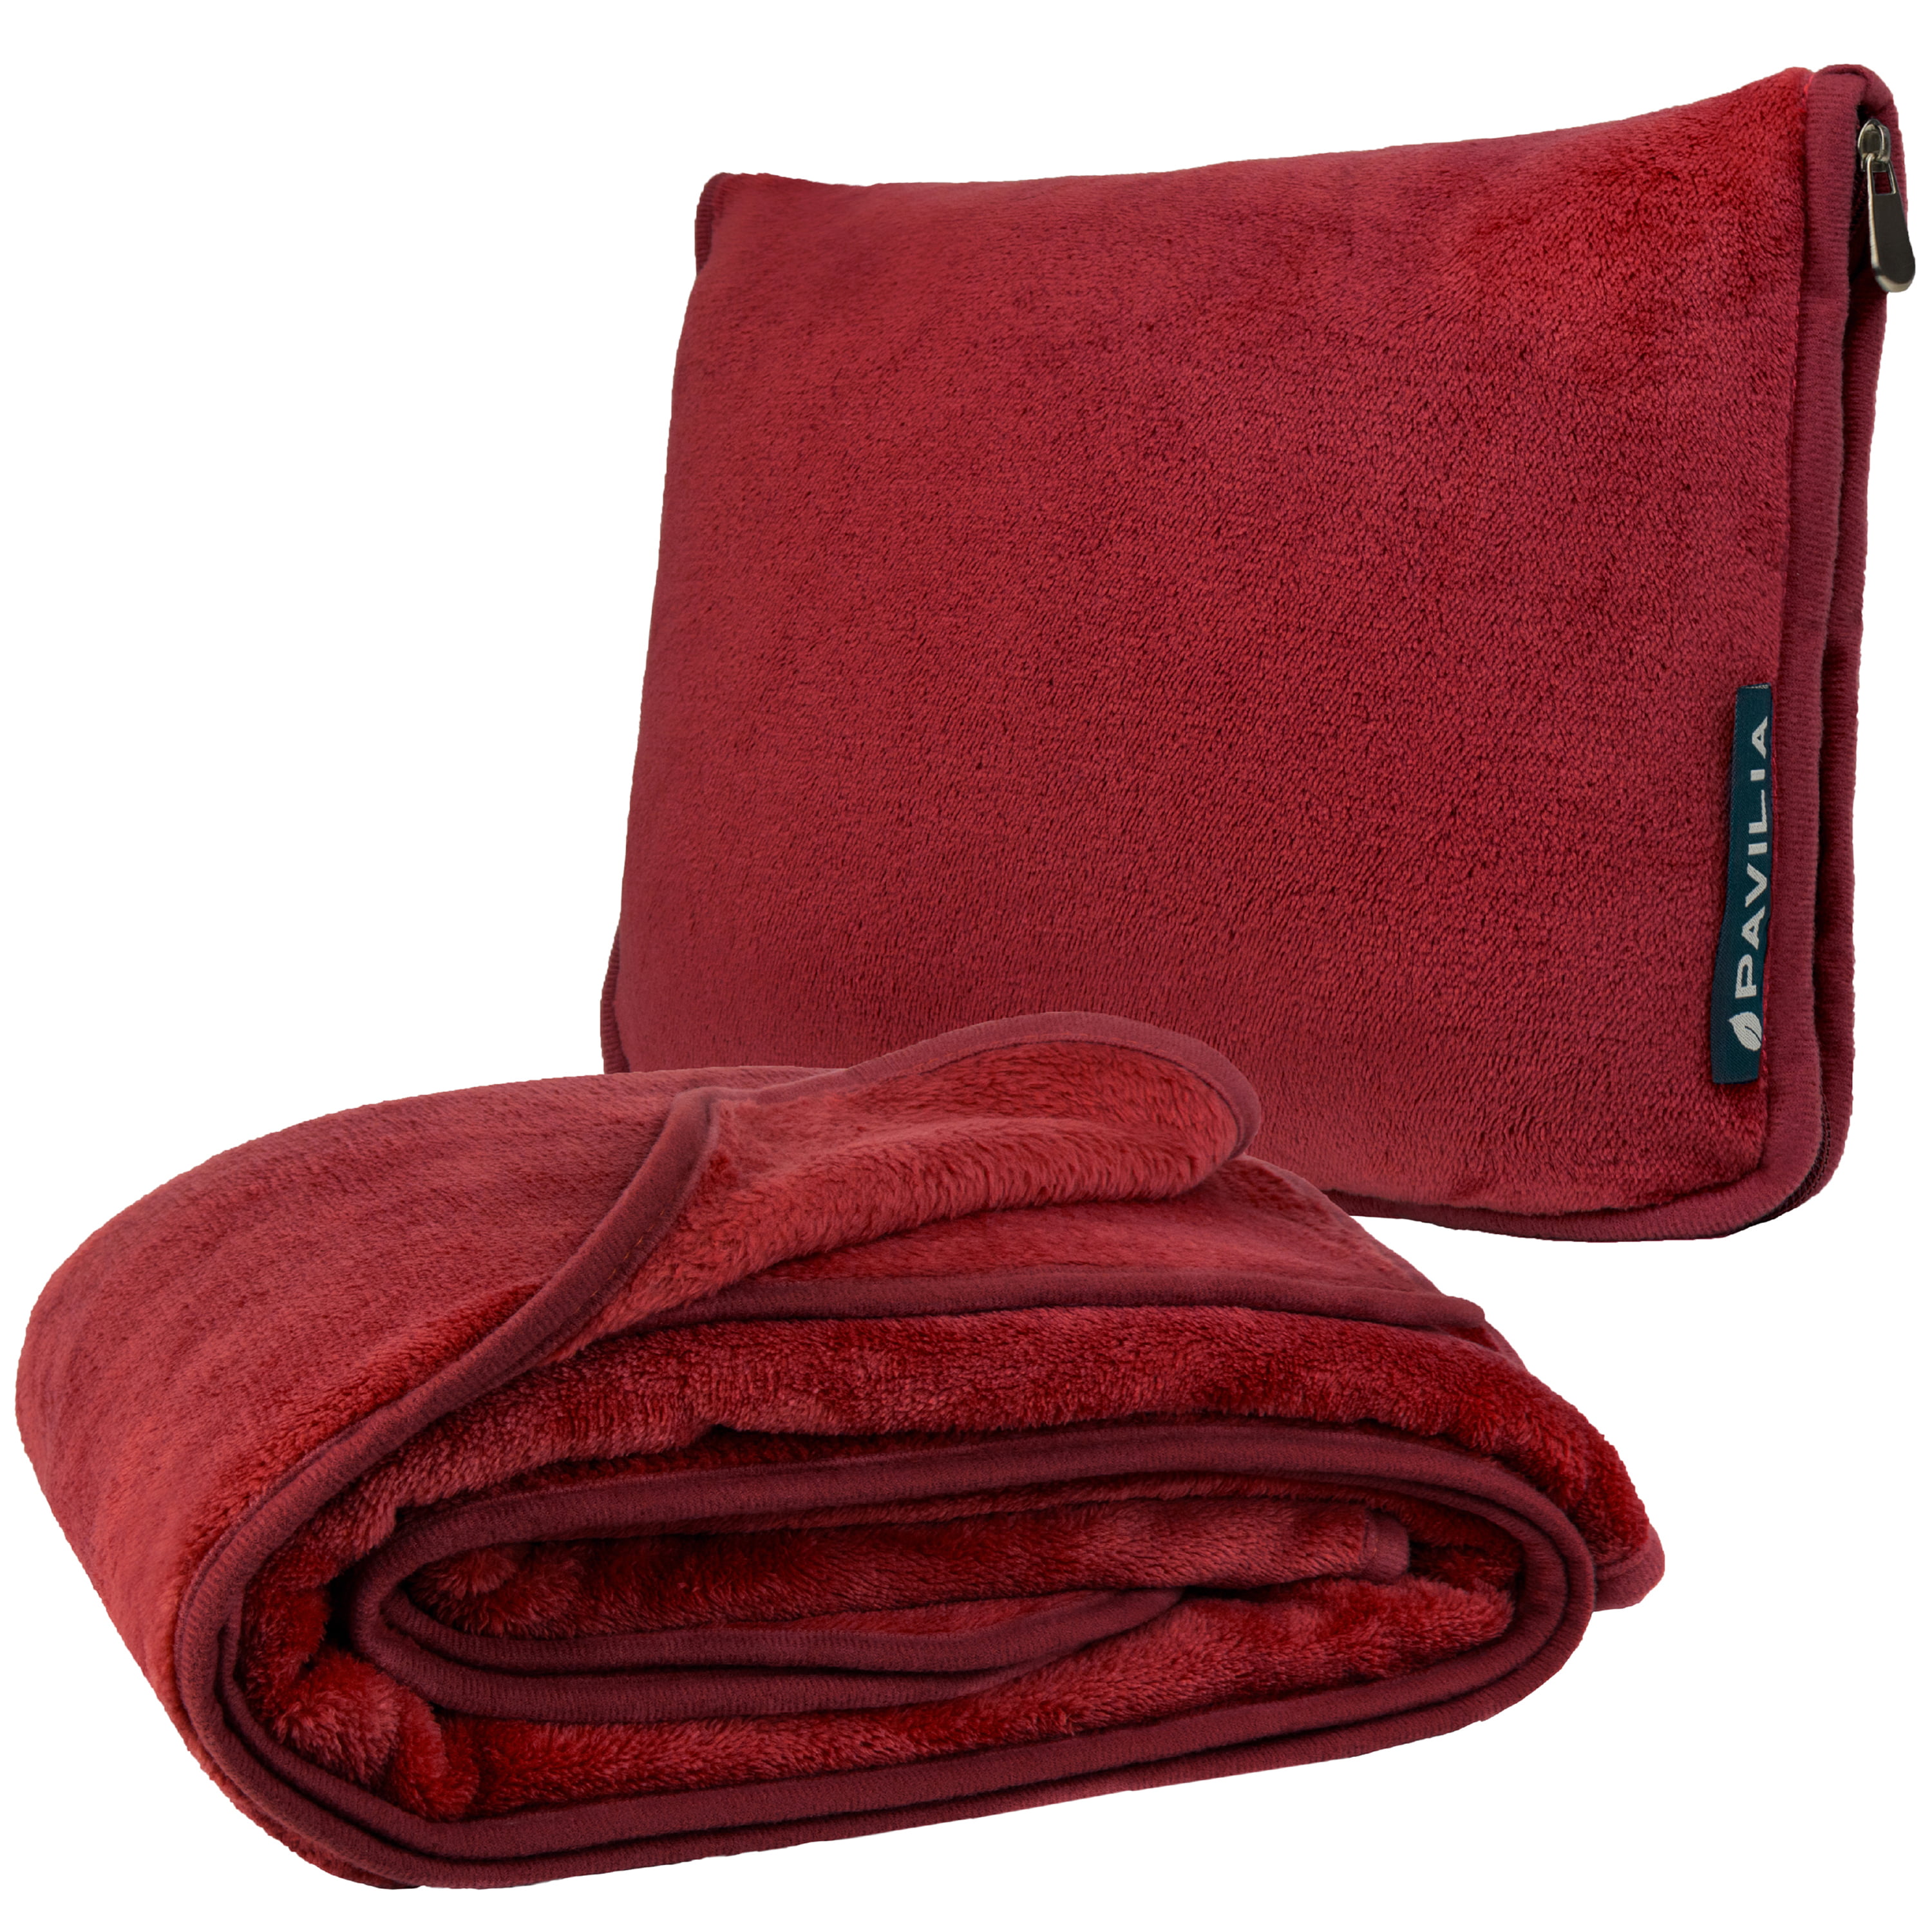 travel pillow and blanket set walmart